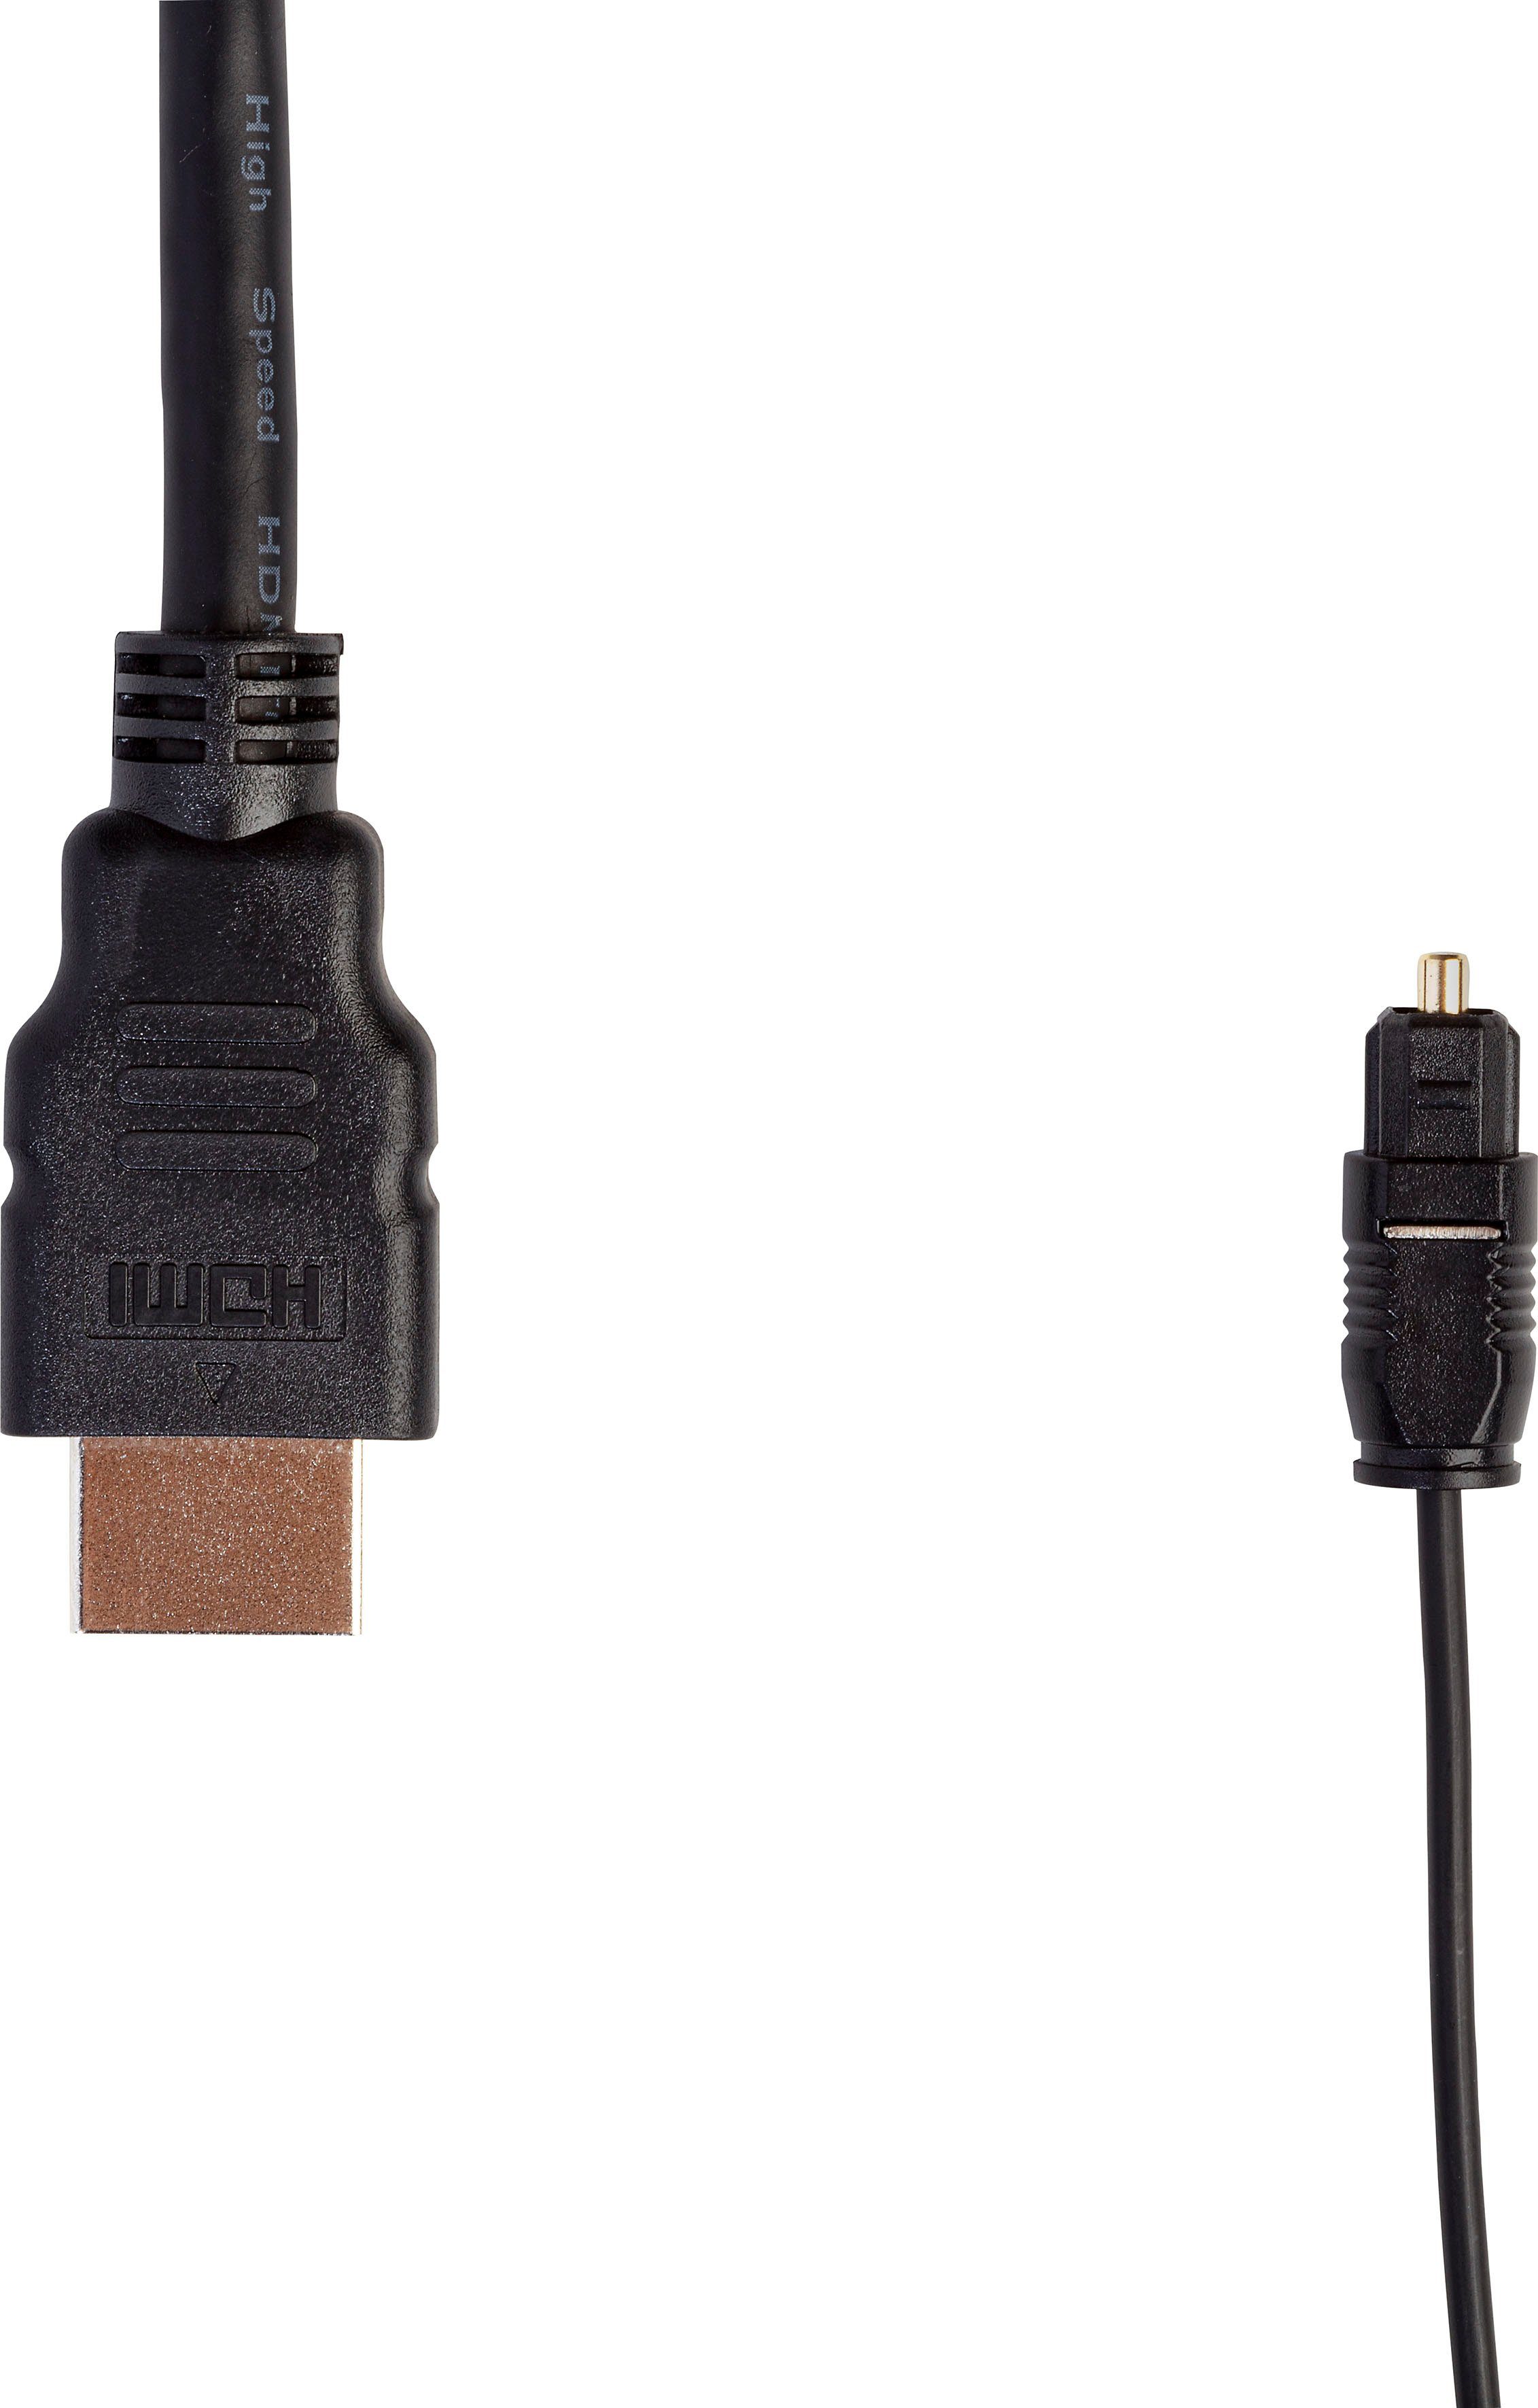 Denon DHT-S416 2.1 Soundbar (Bluetooth, ARC) Subwoofer, Chromecast, HDMI kabelloser